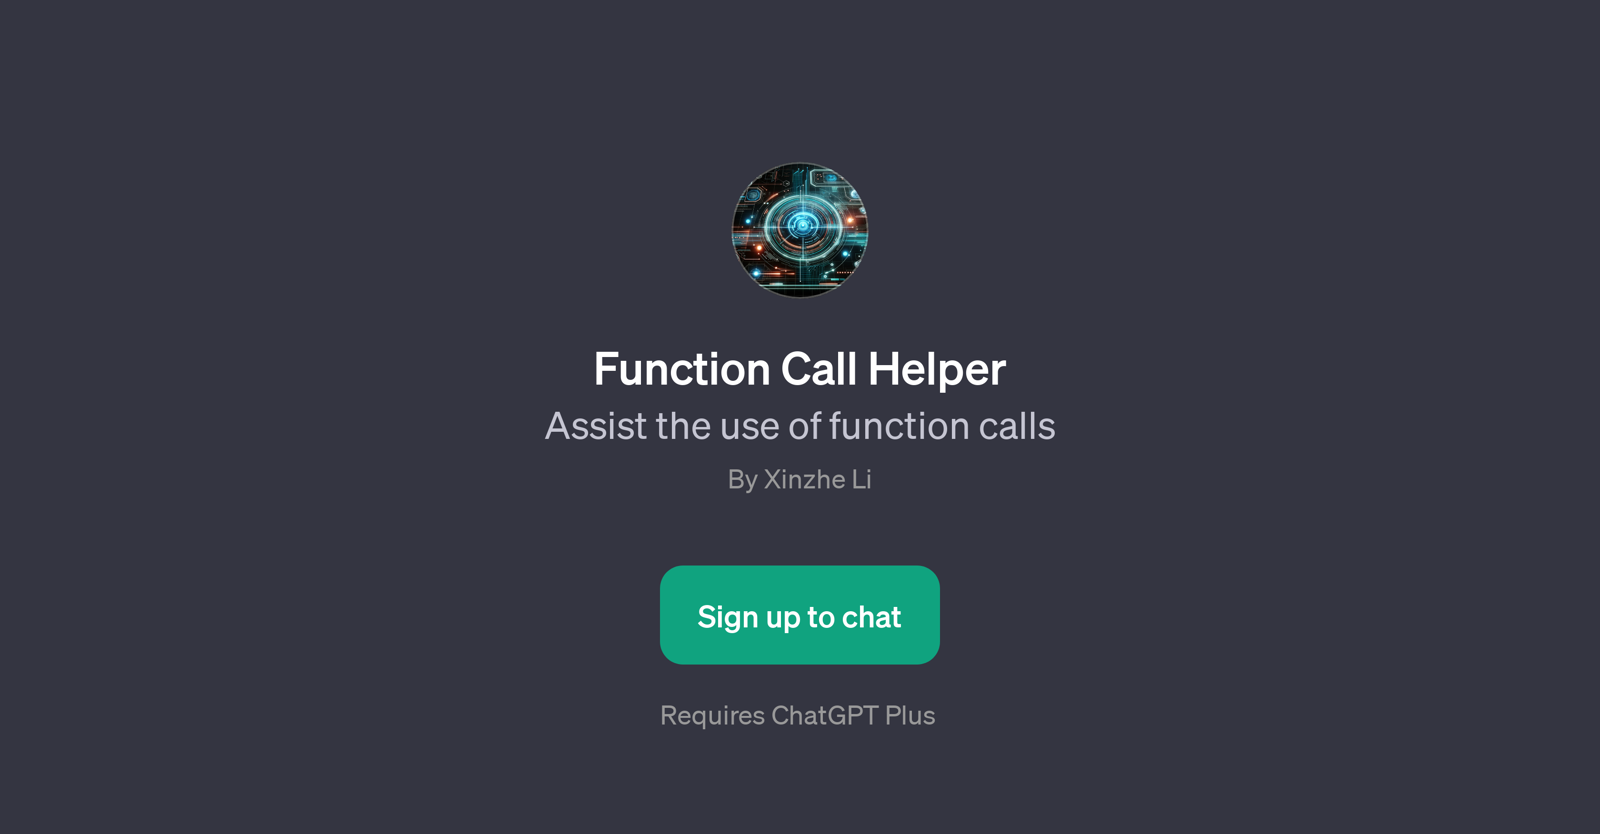 Function Call Helper website